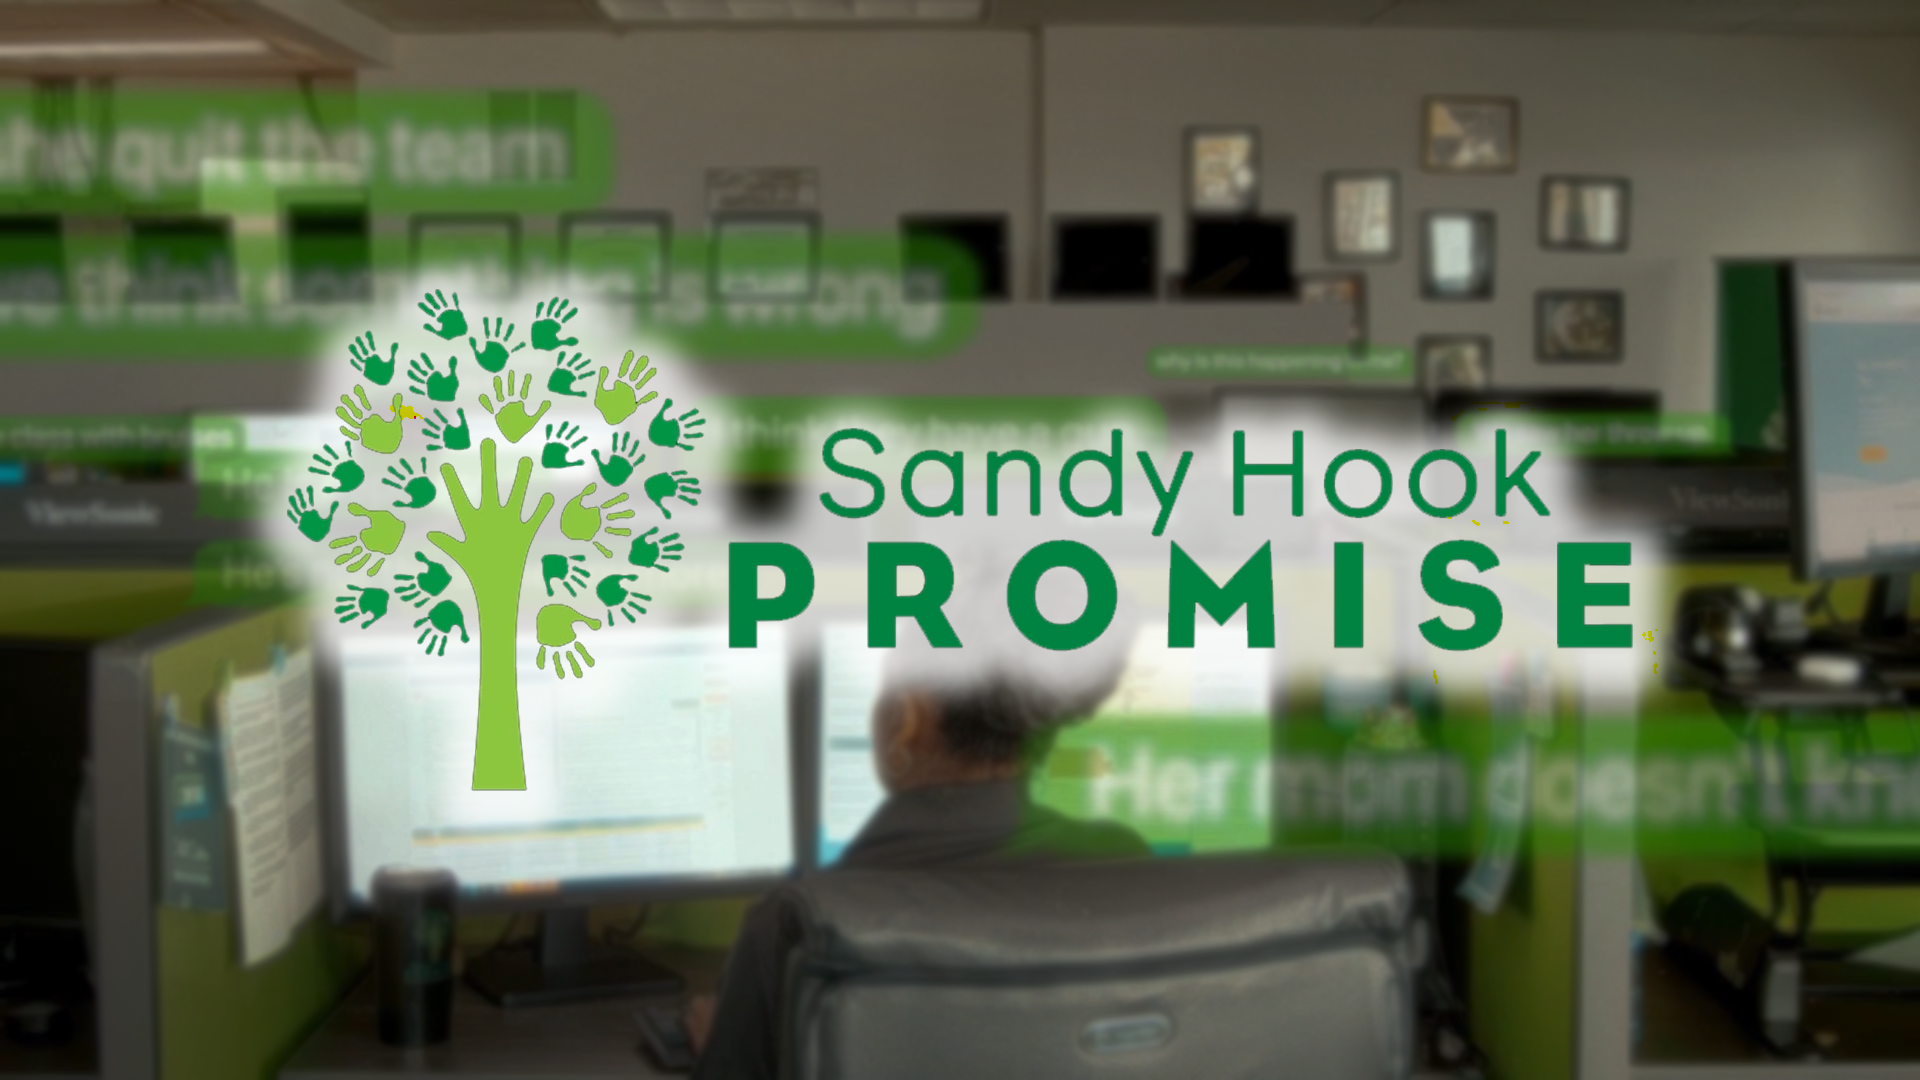 Sandy Hook Promise|https://vimeo.com/785894534/8070d2bff4